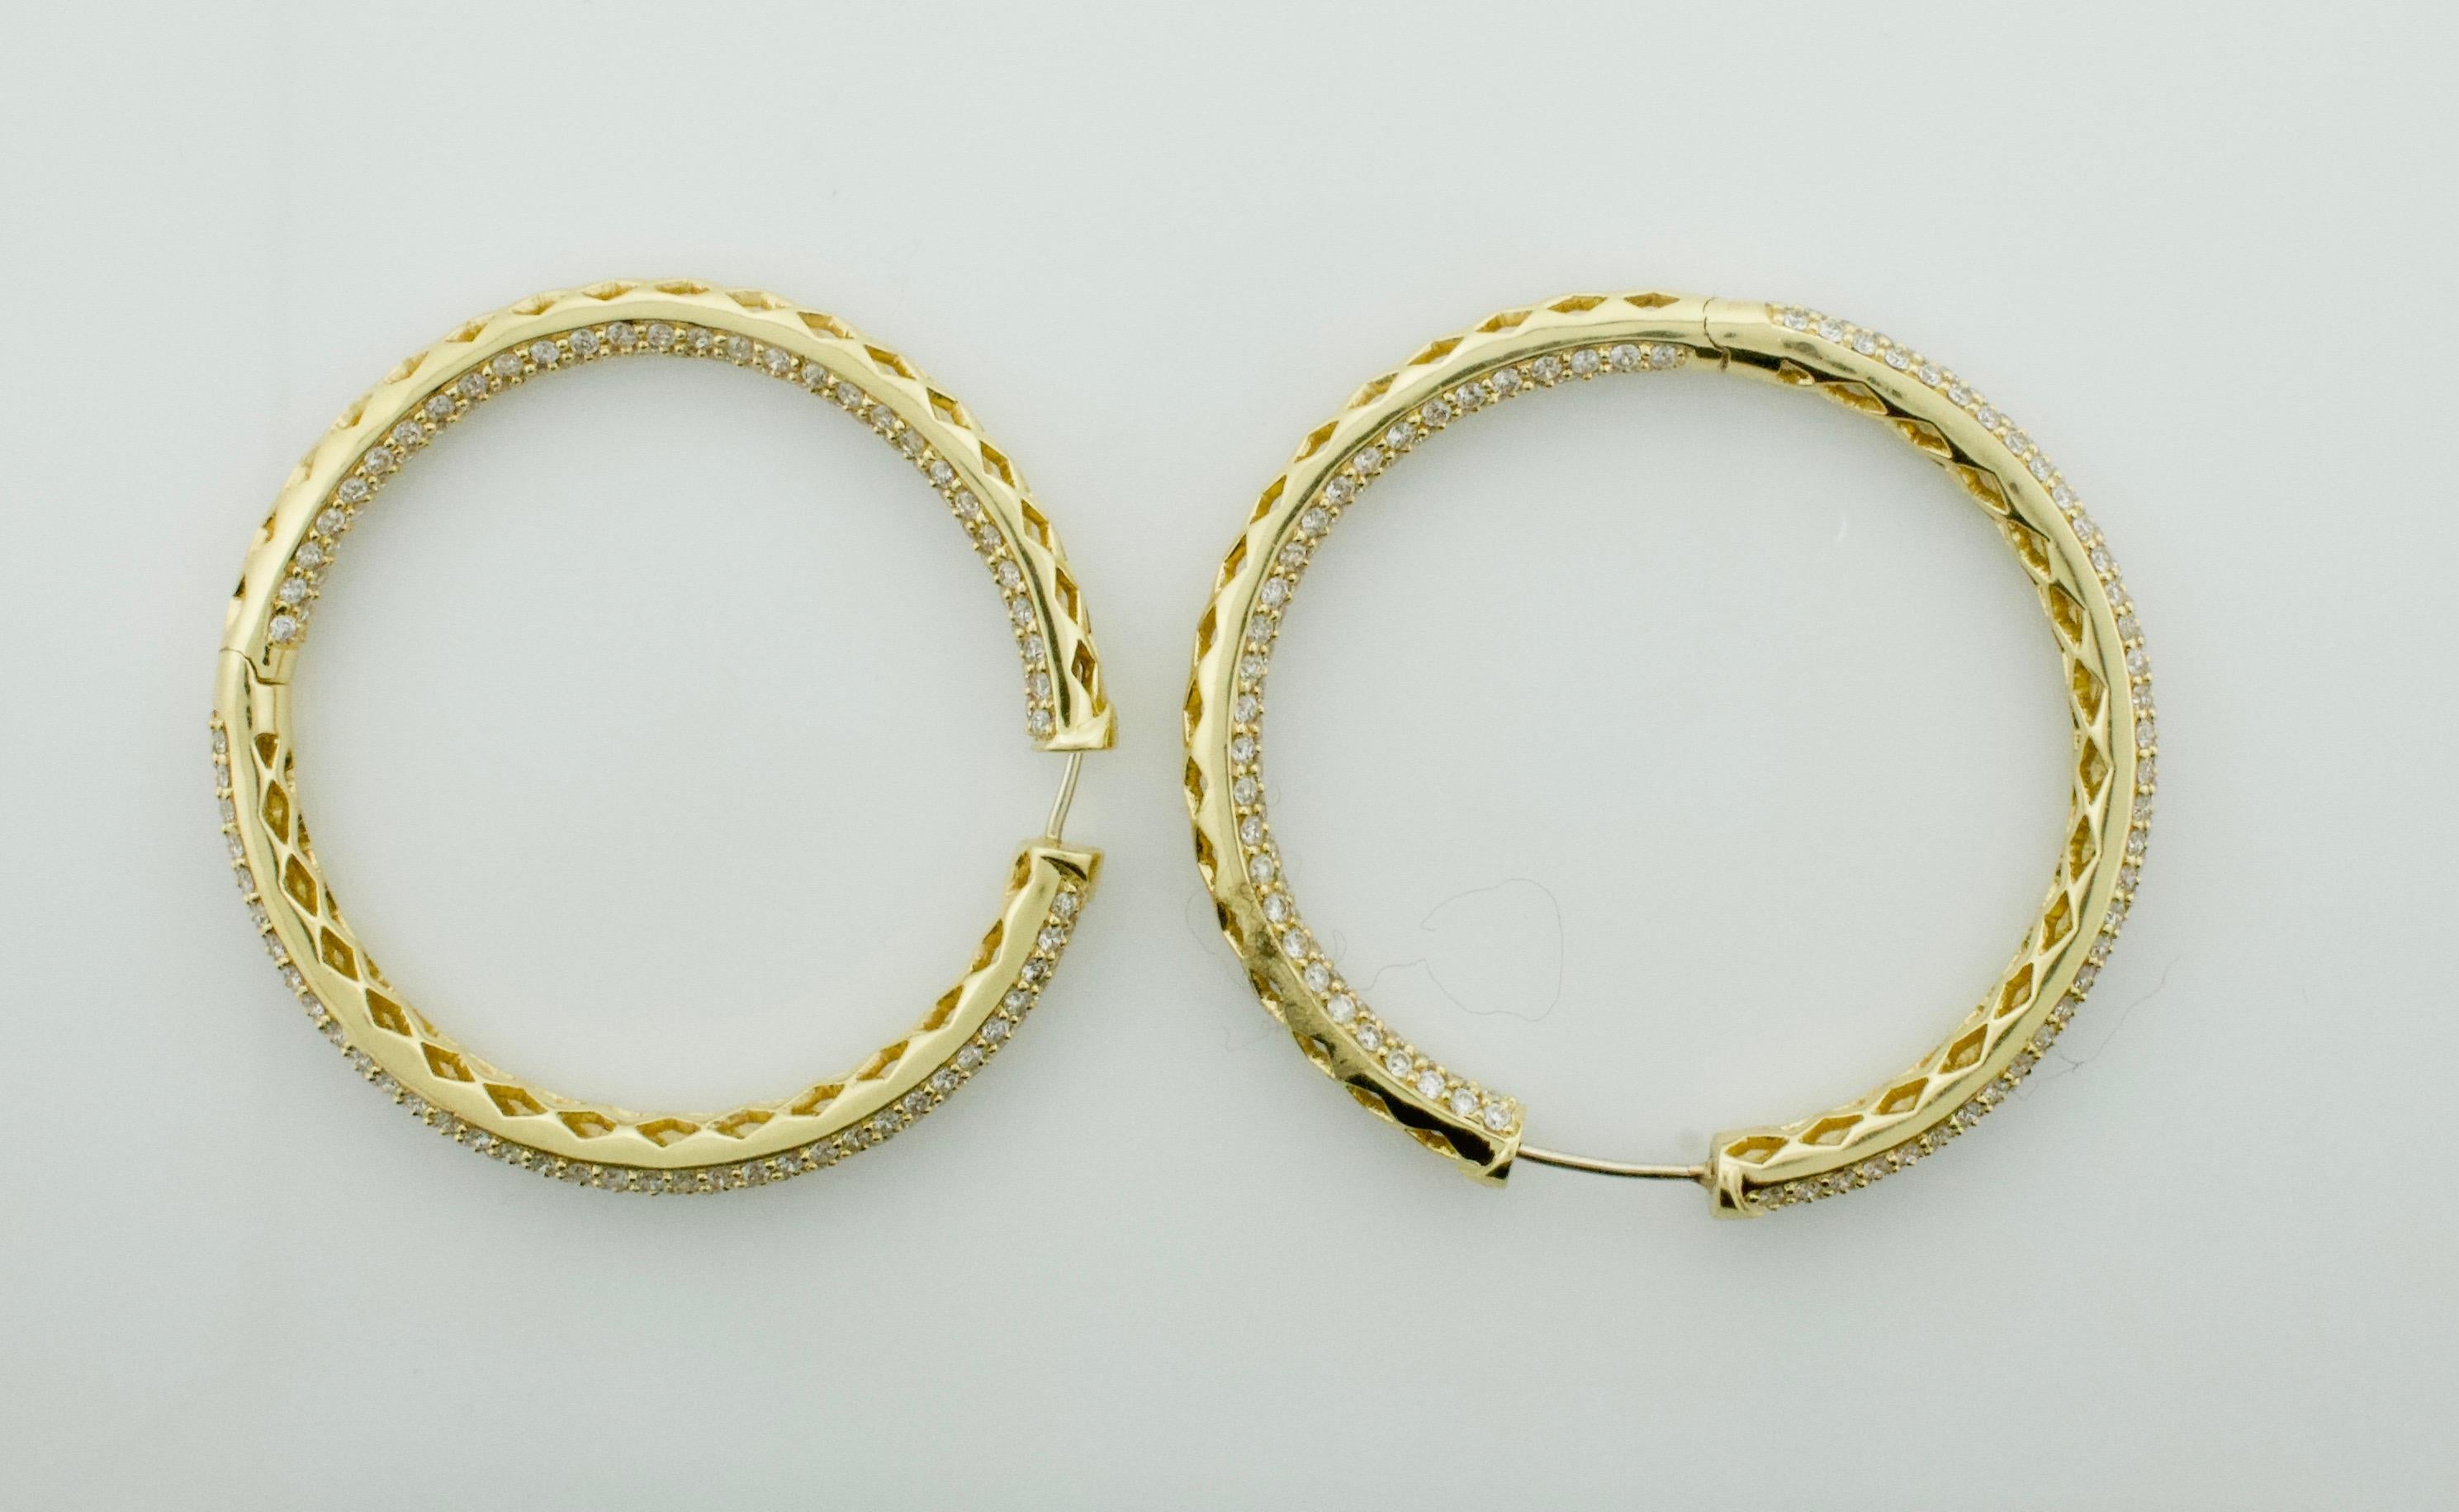 Modern Groovy Large Hoop Pave' Diamond Earrings in 18k Yellow Gold